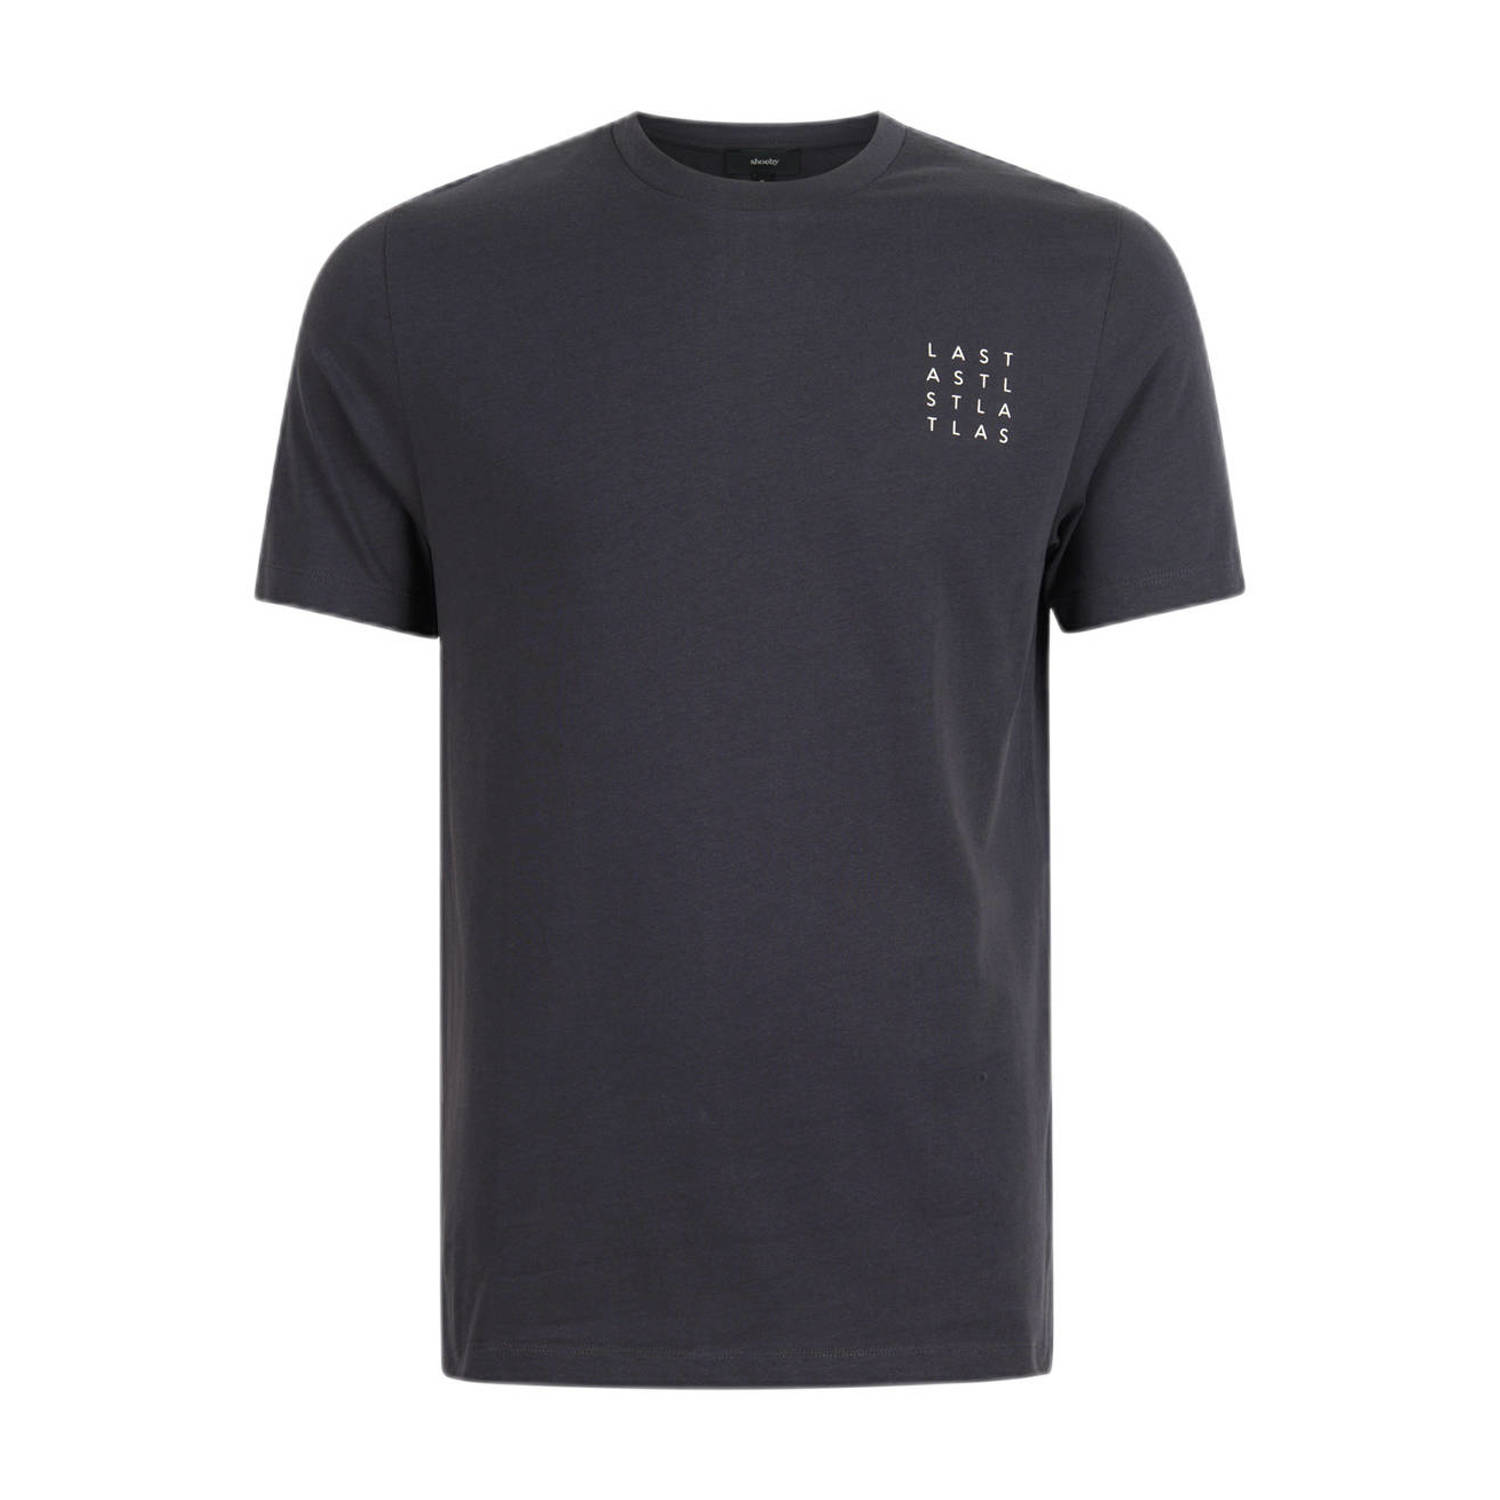 Shoeby T-shirt met printopdruk dark grey